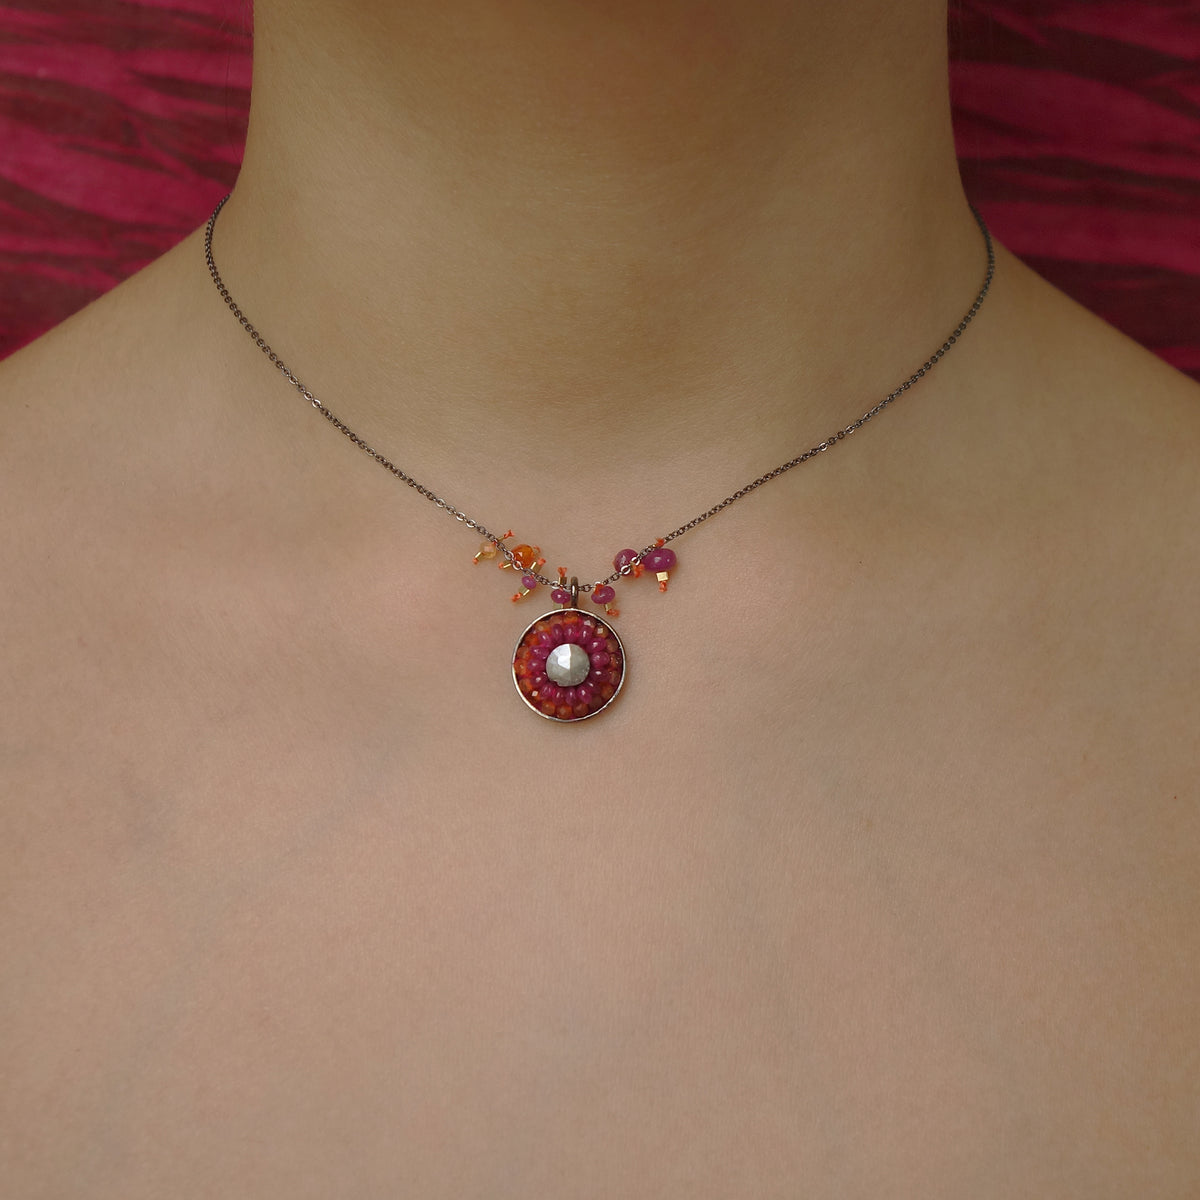 Sunrise, Sunset silverite, ruby, and carnelian necklace